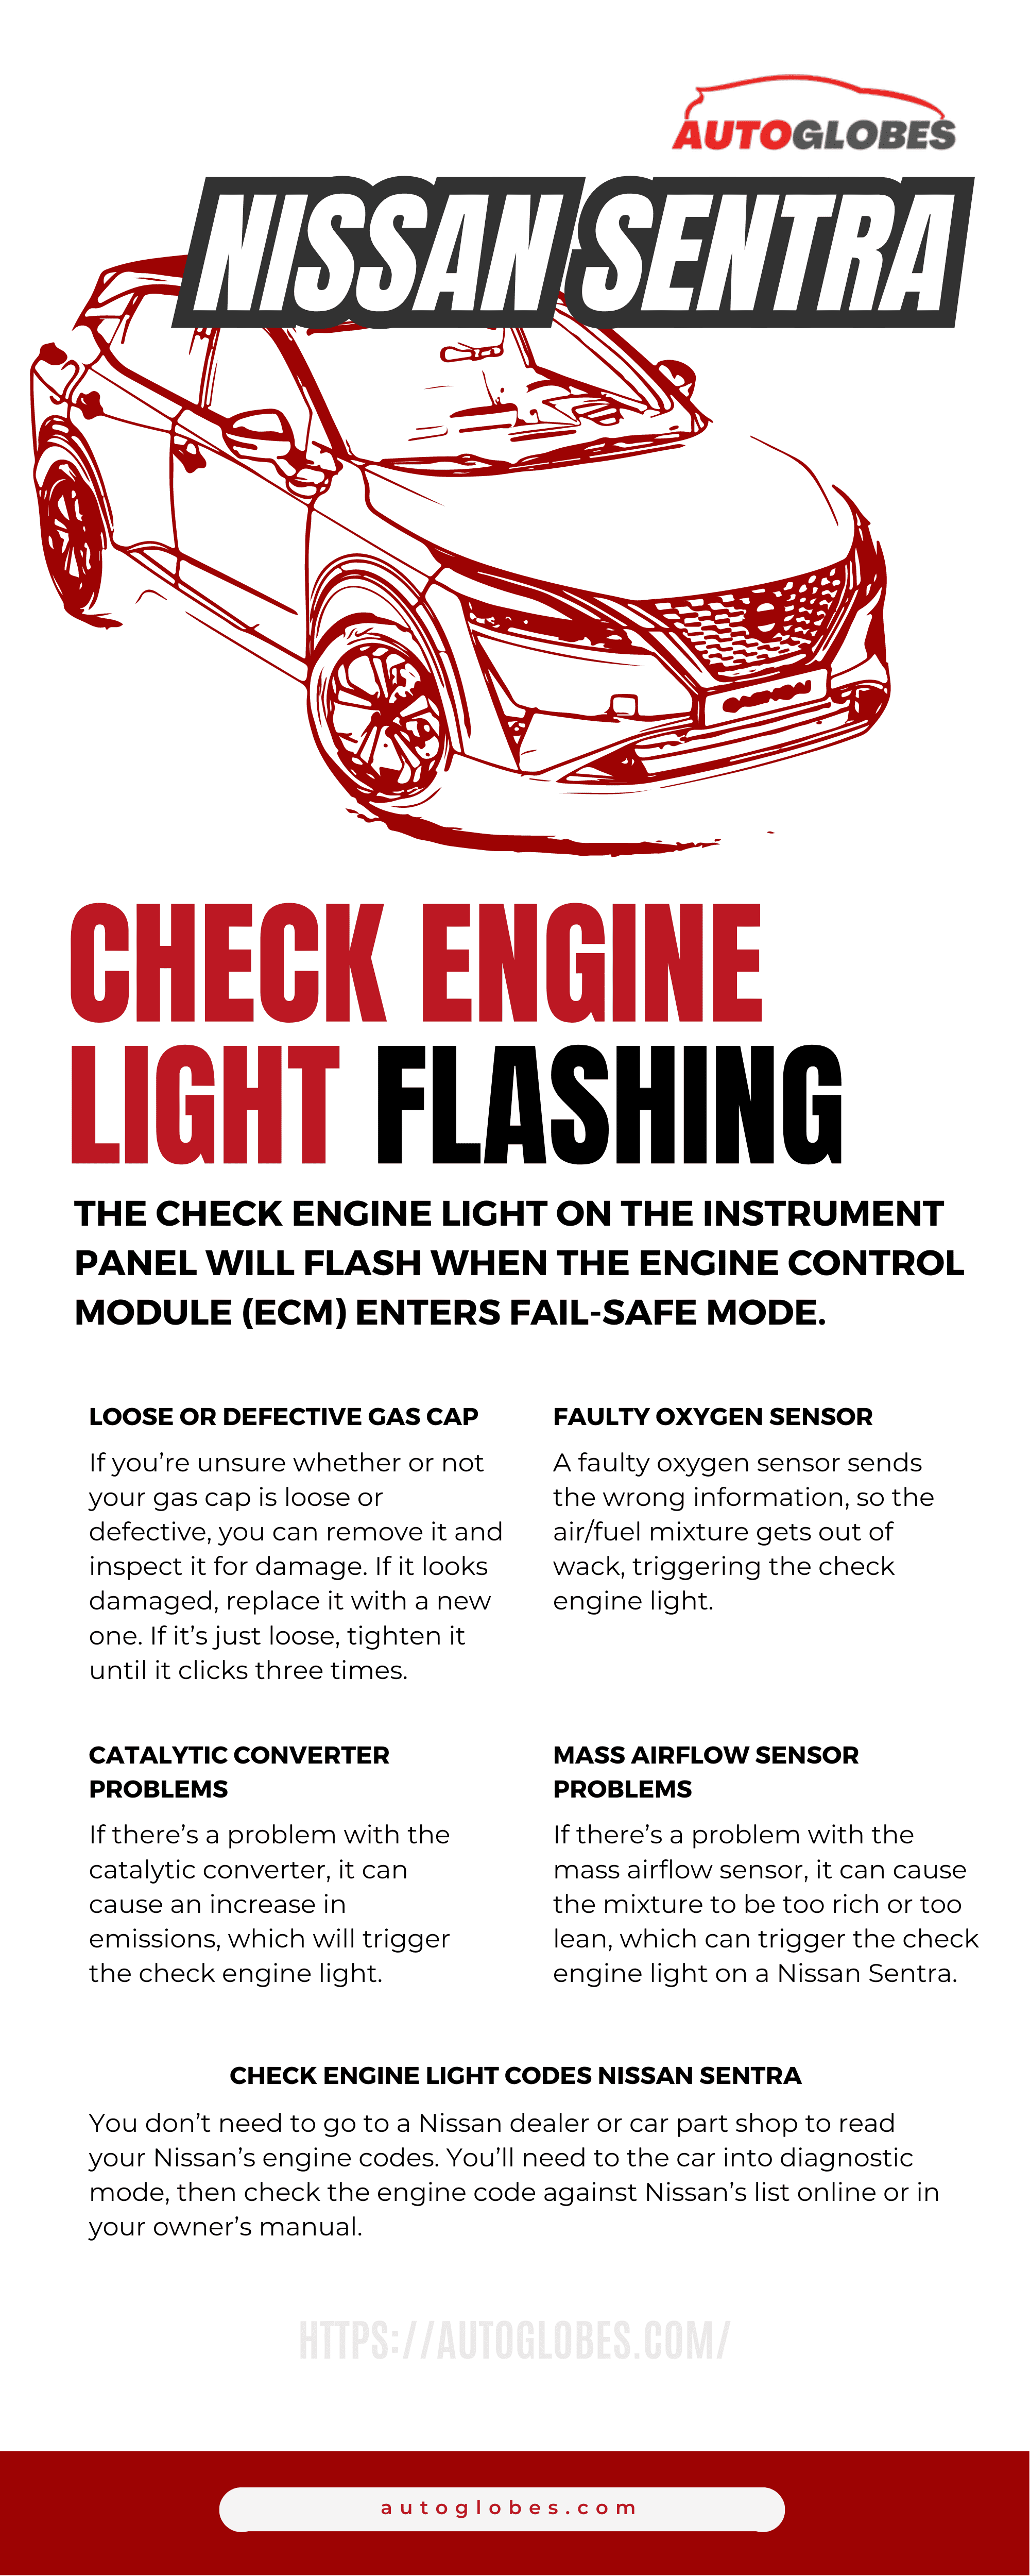 Check Engine Light flashing Infographic